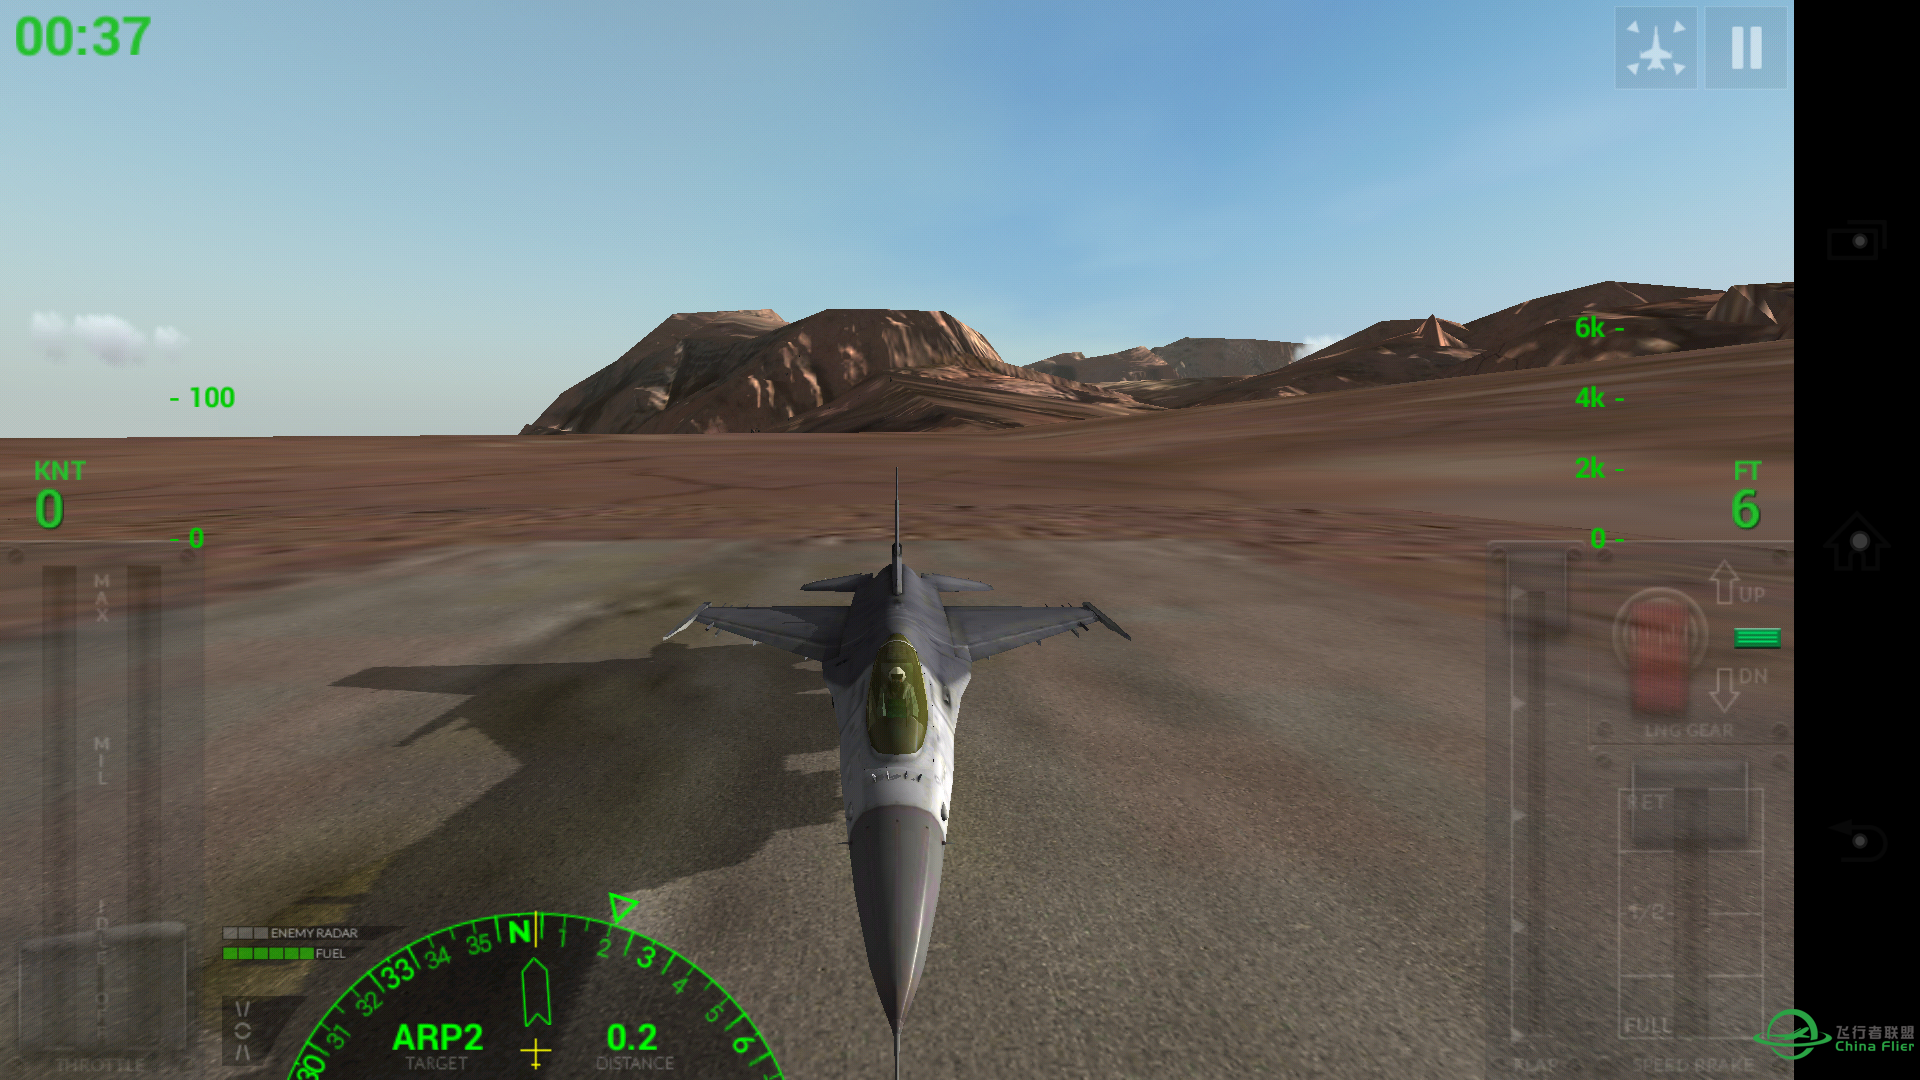 [截图而已]F18 Carrier Landing2 Pro-402 